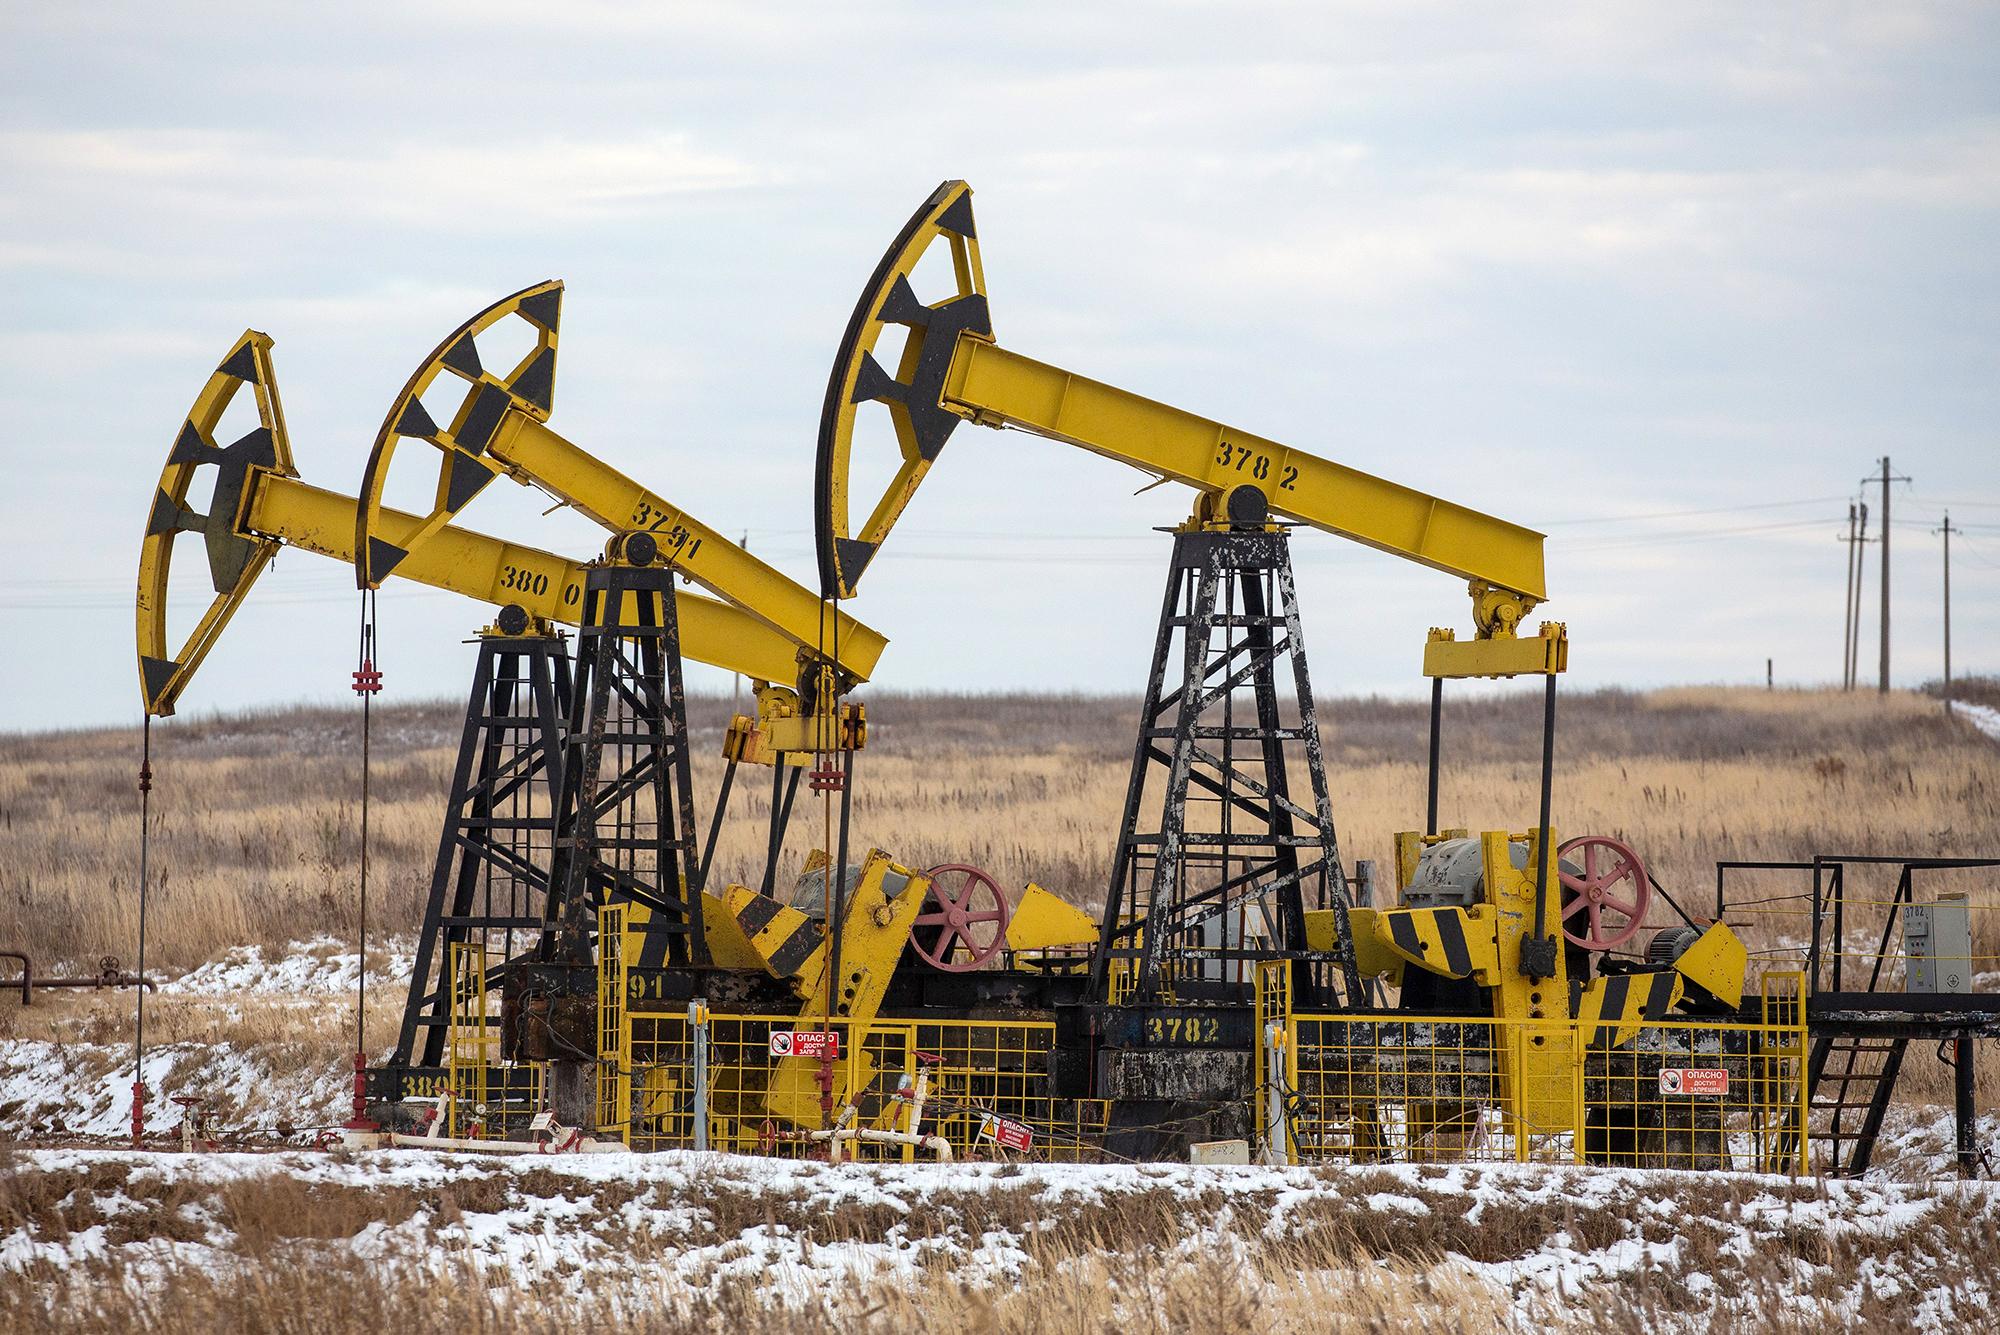 Naftna bušotina "British Petrola" u Rusiji - Avaz